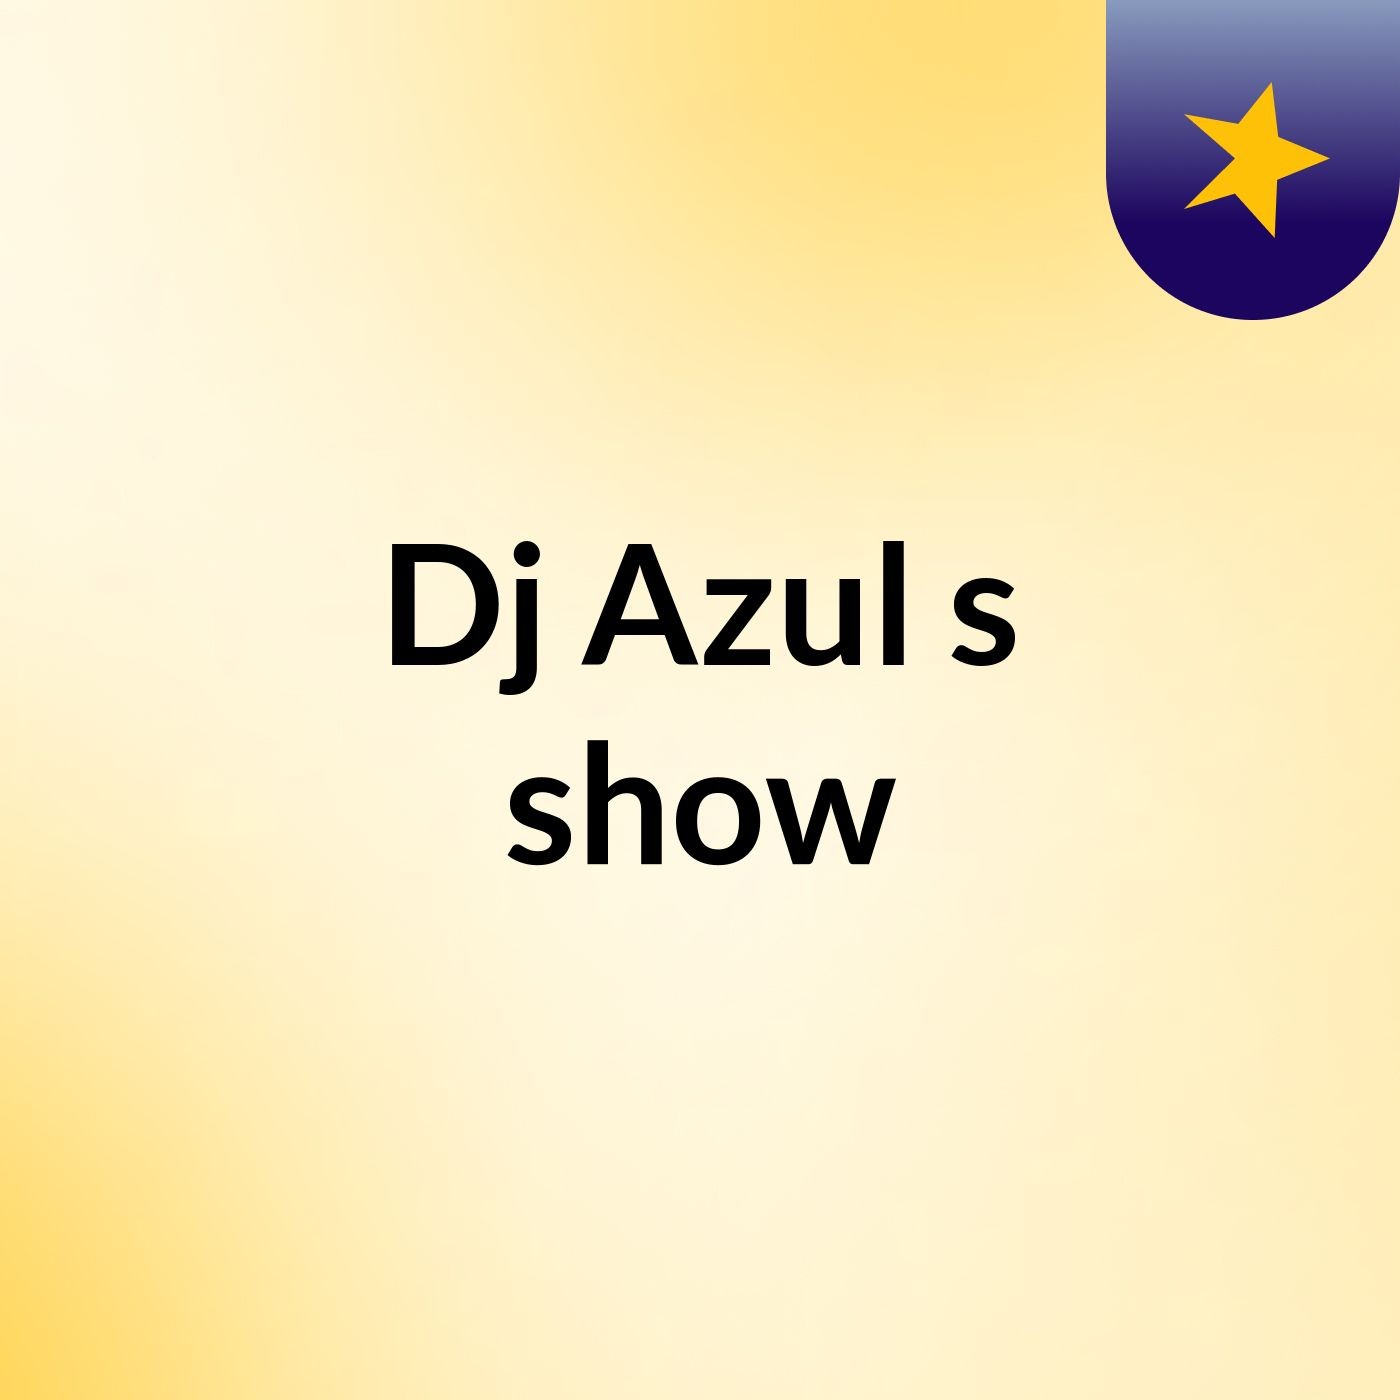 Dj Azul's show